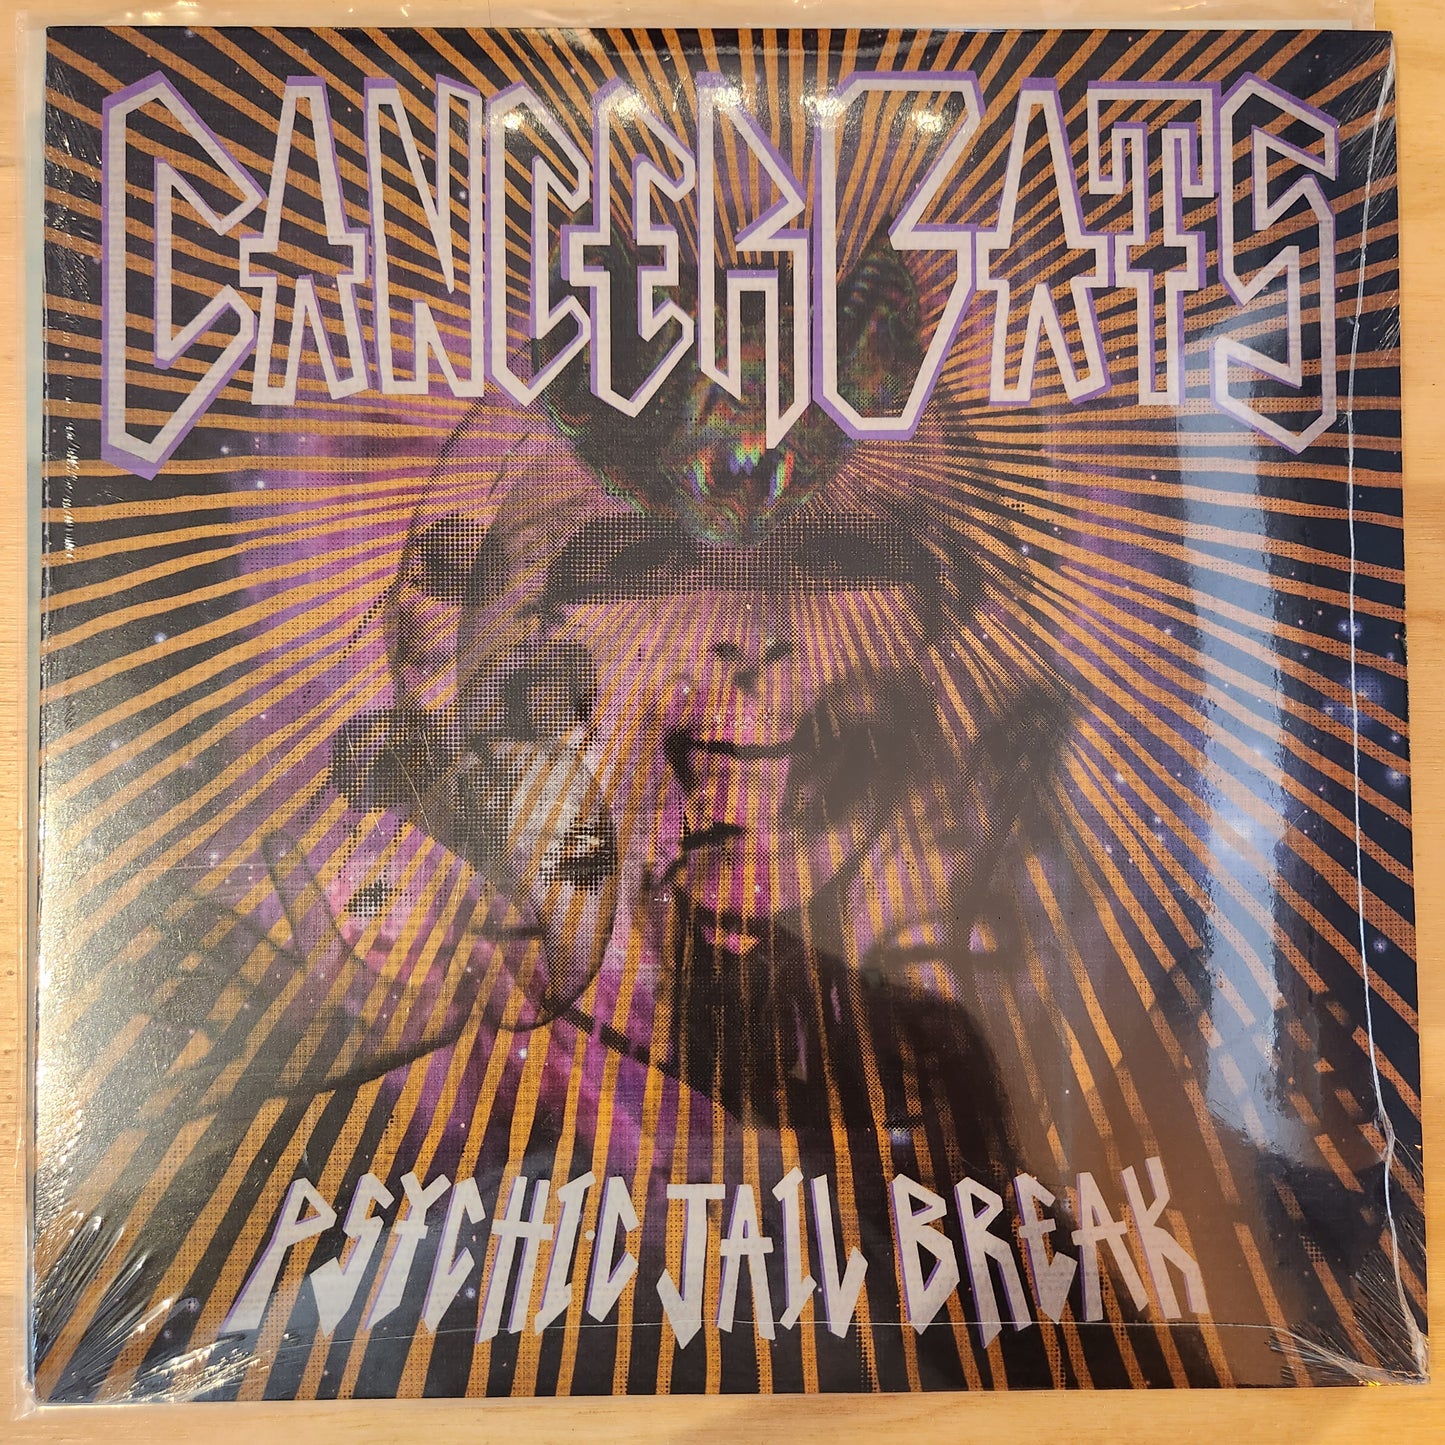 Cancer Bats - Psychic Jail Break- Vinyl LP